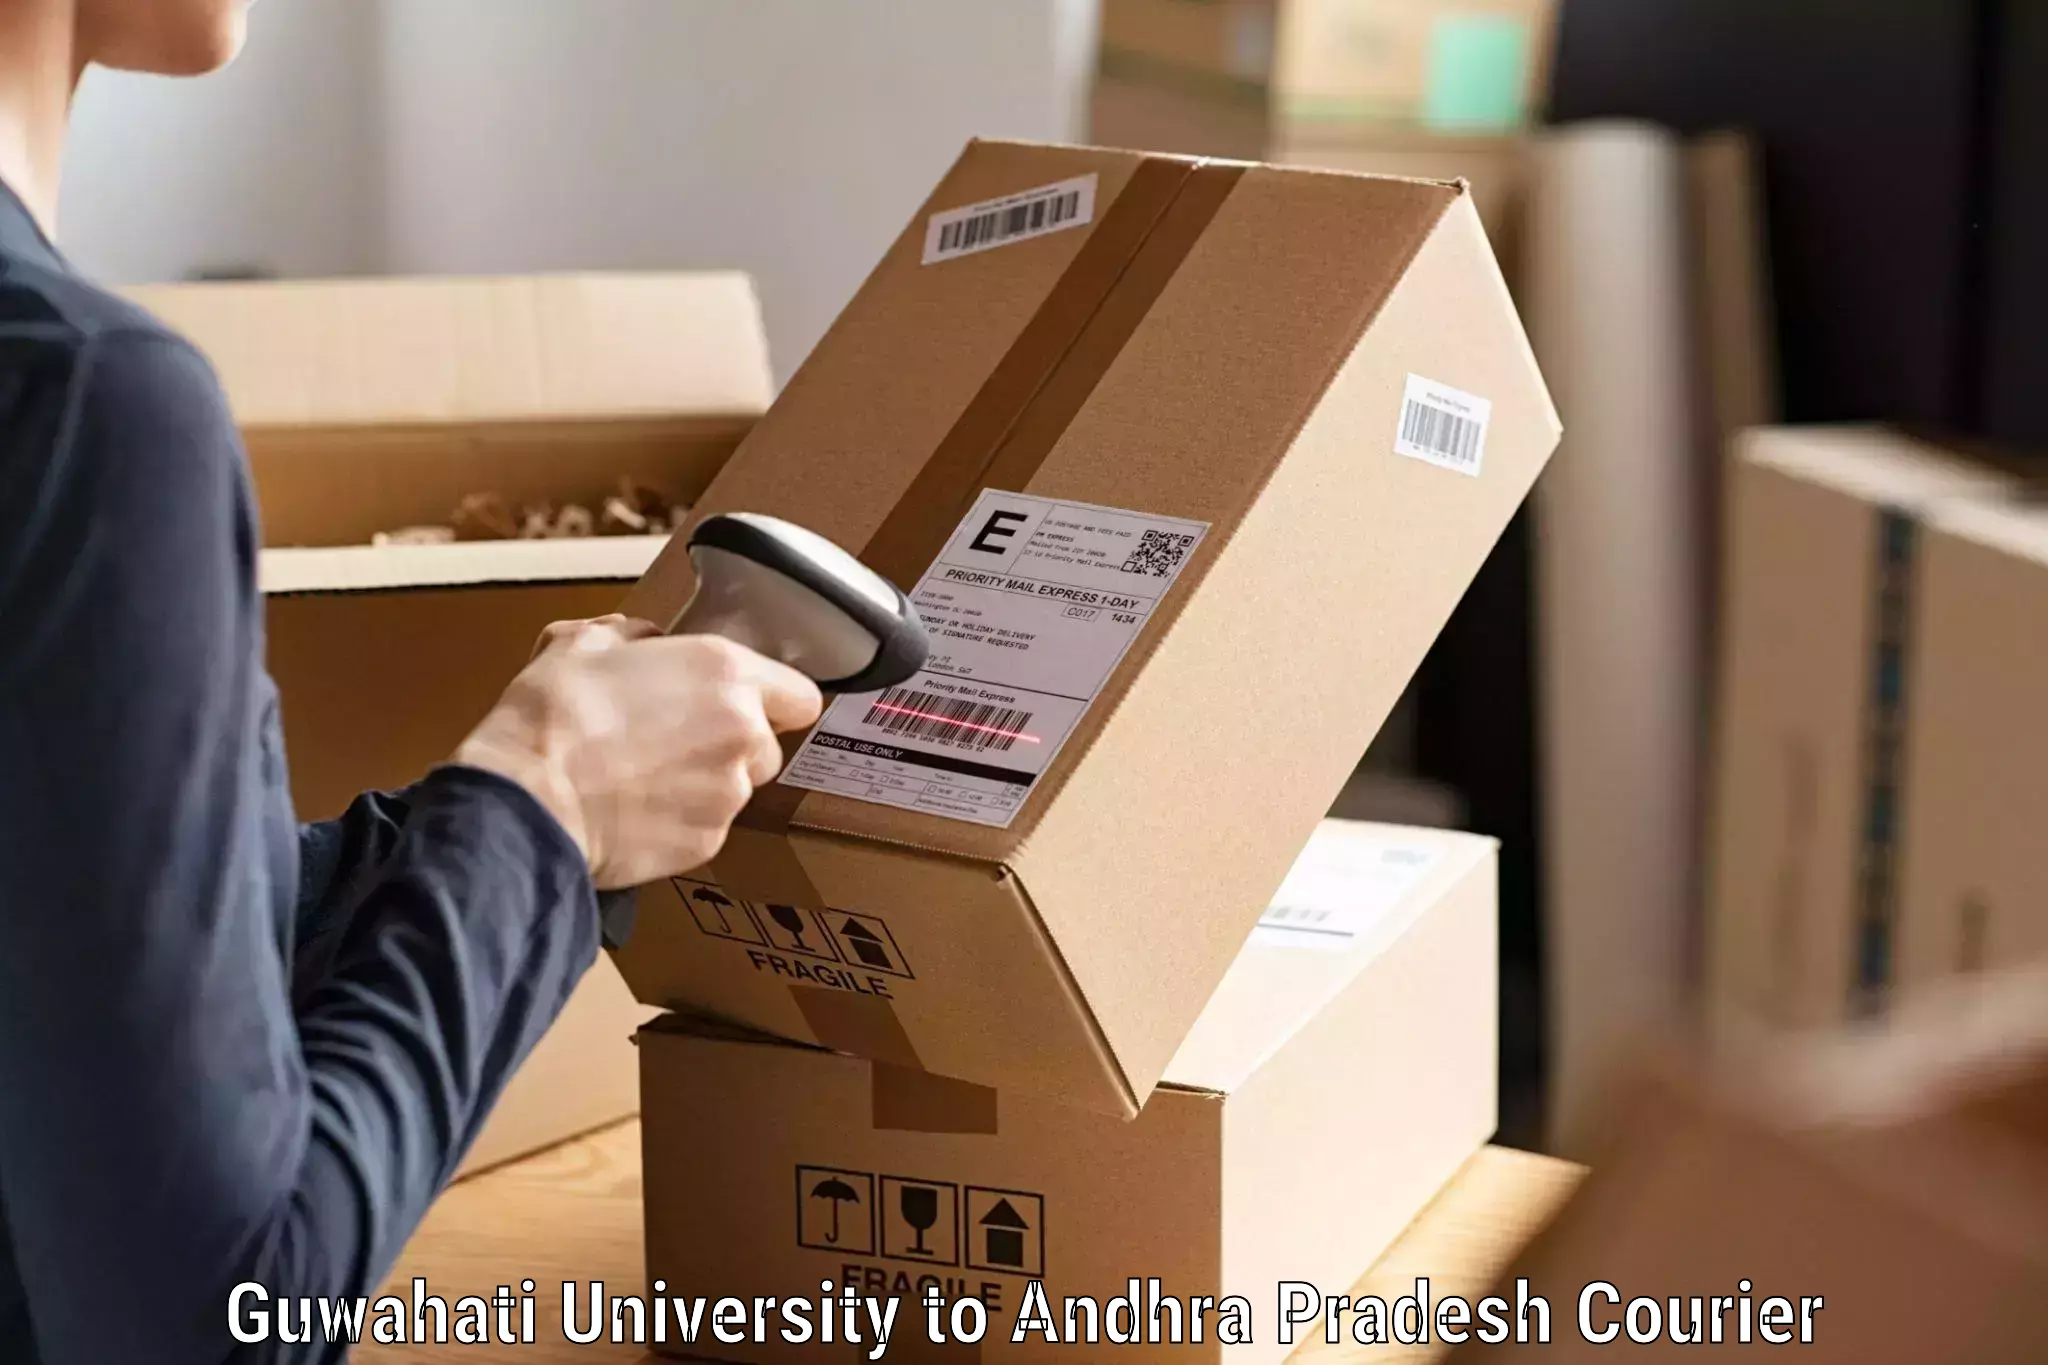 Local delivery service Guwahati University to Andhra Pradesh